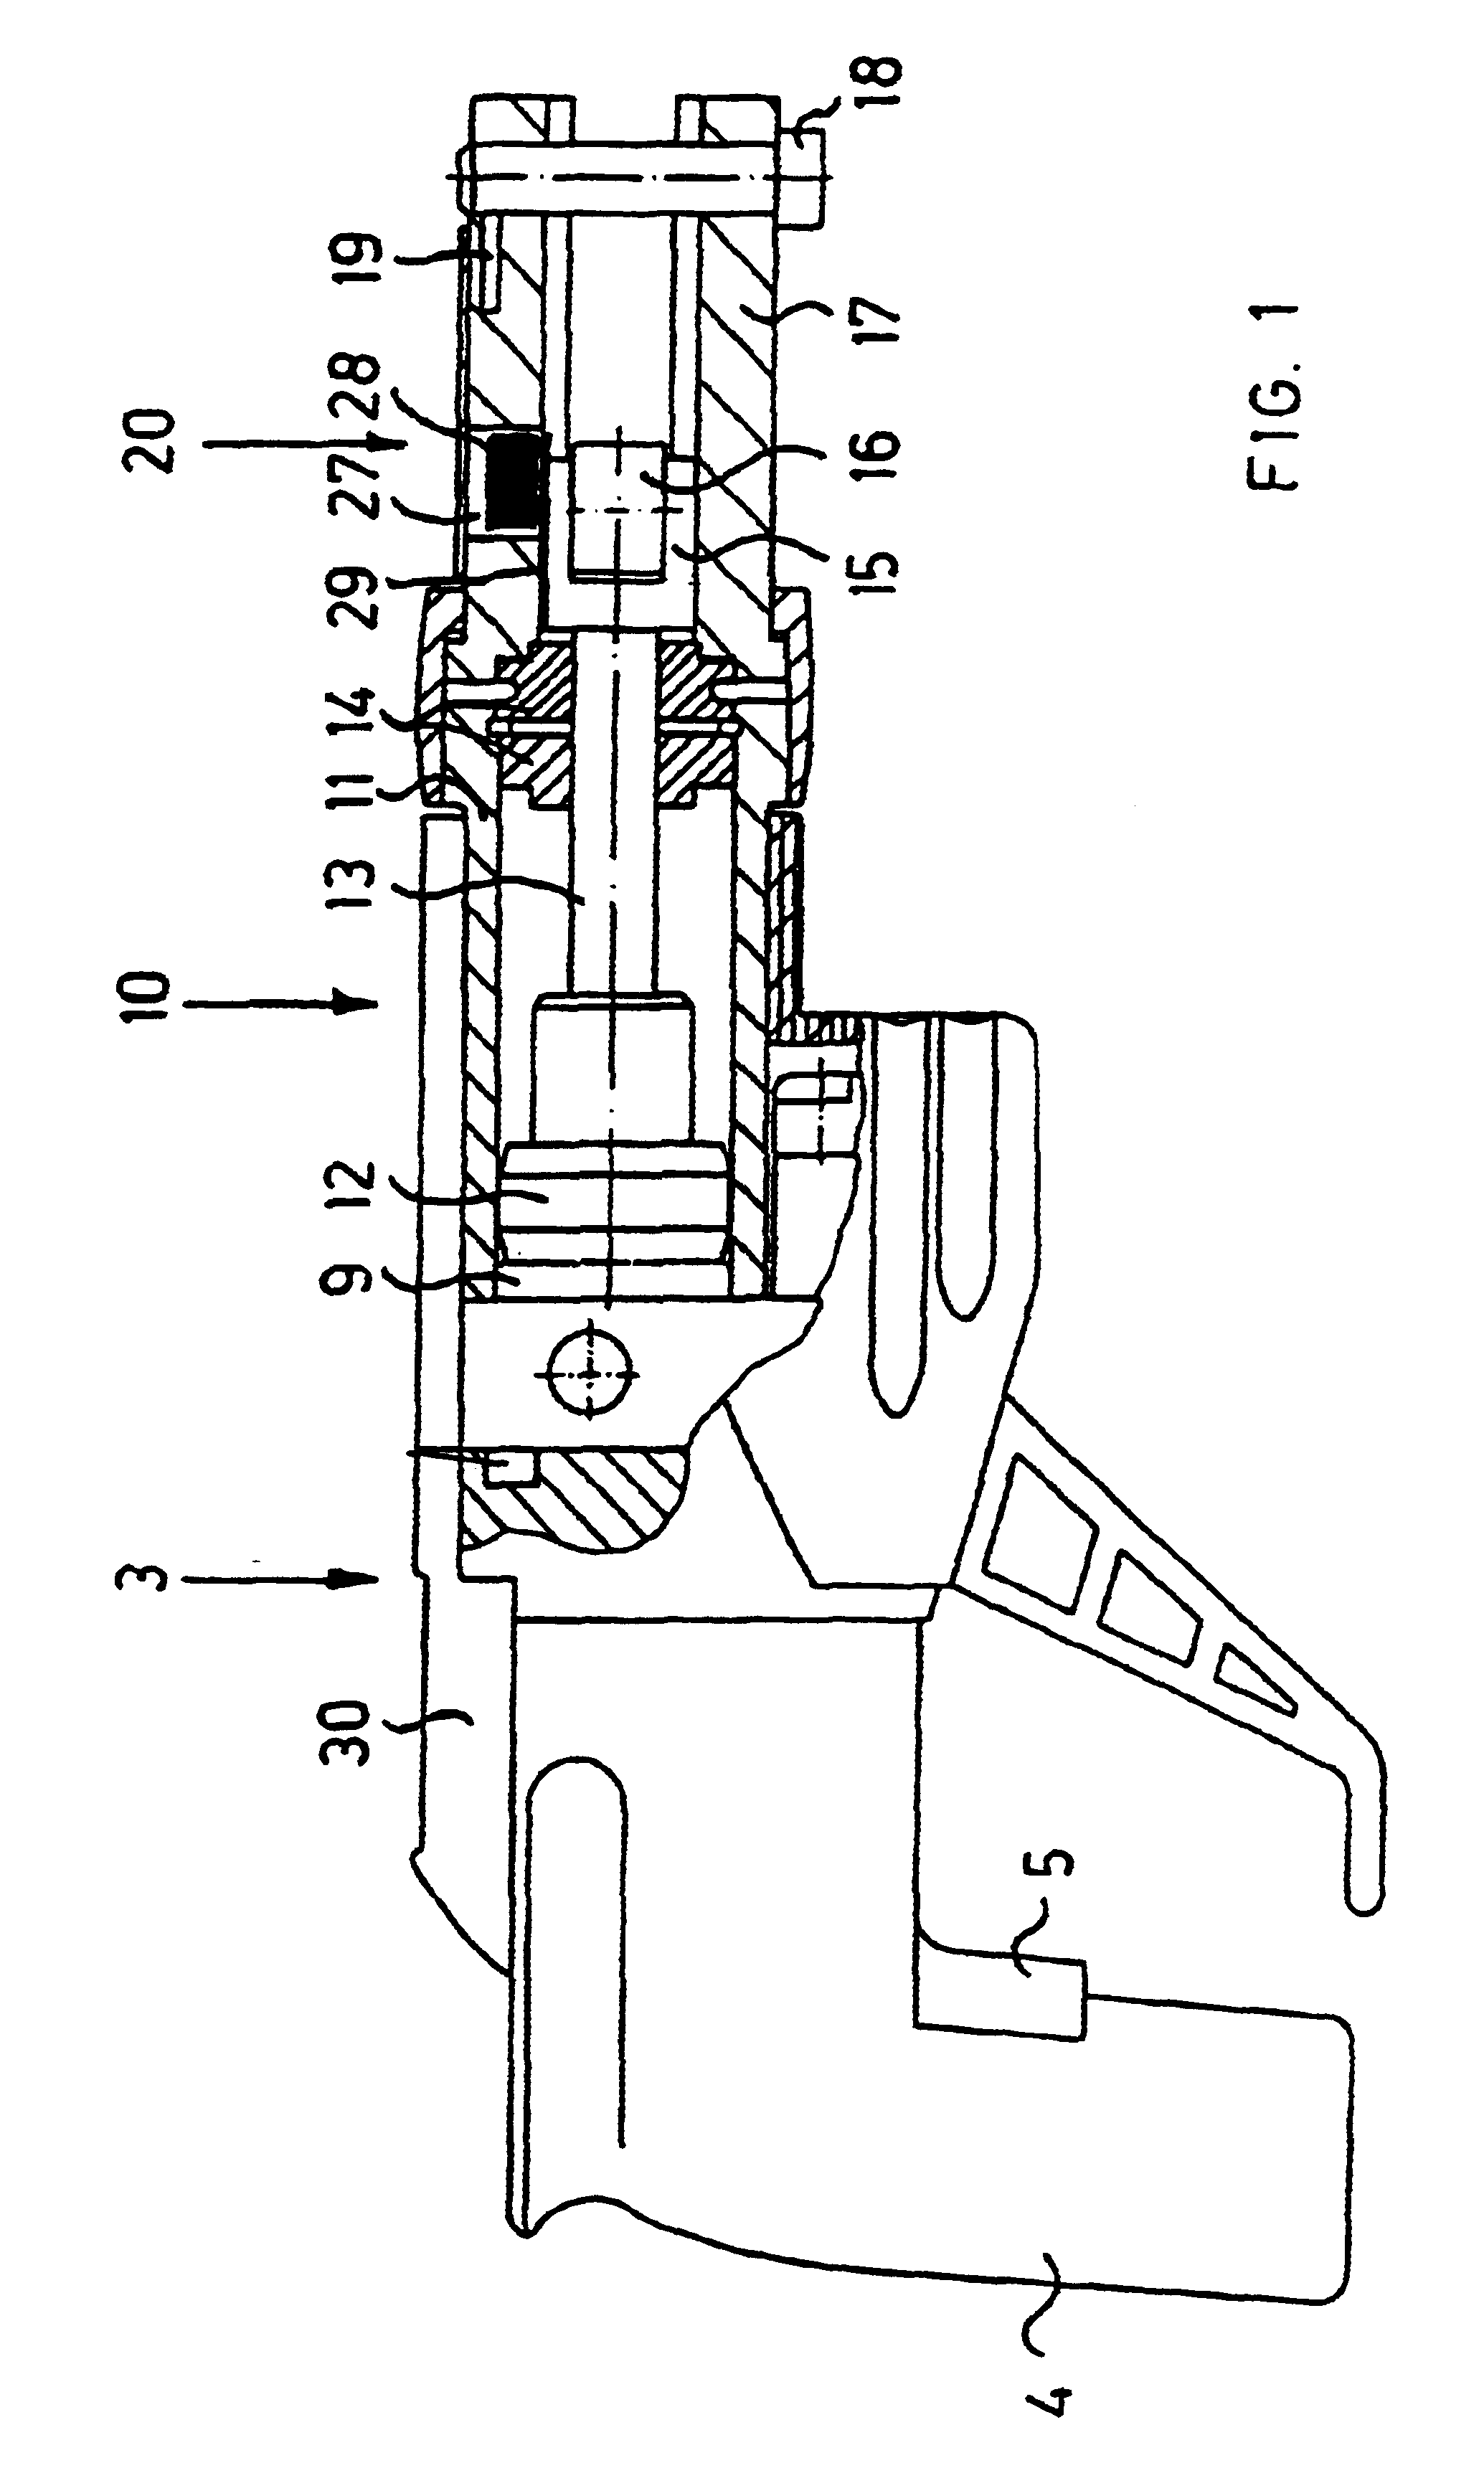 Pressing tool apparatus and control method